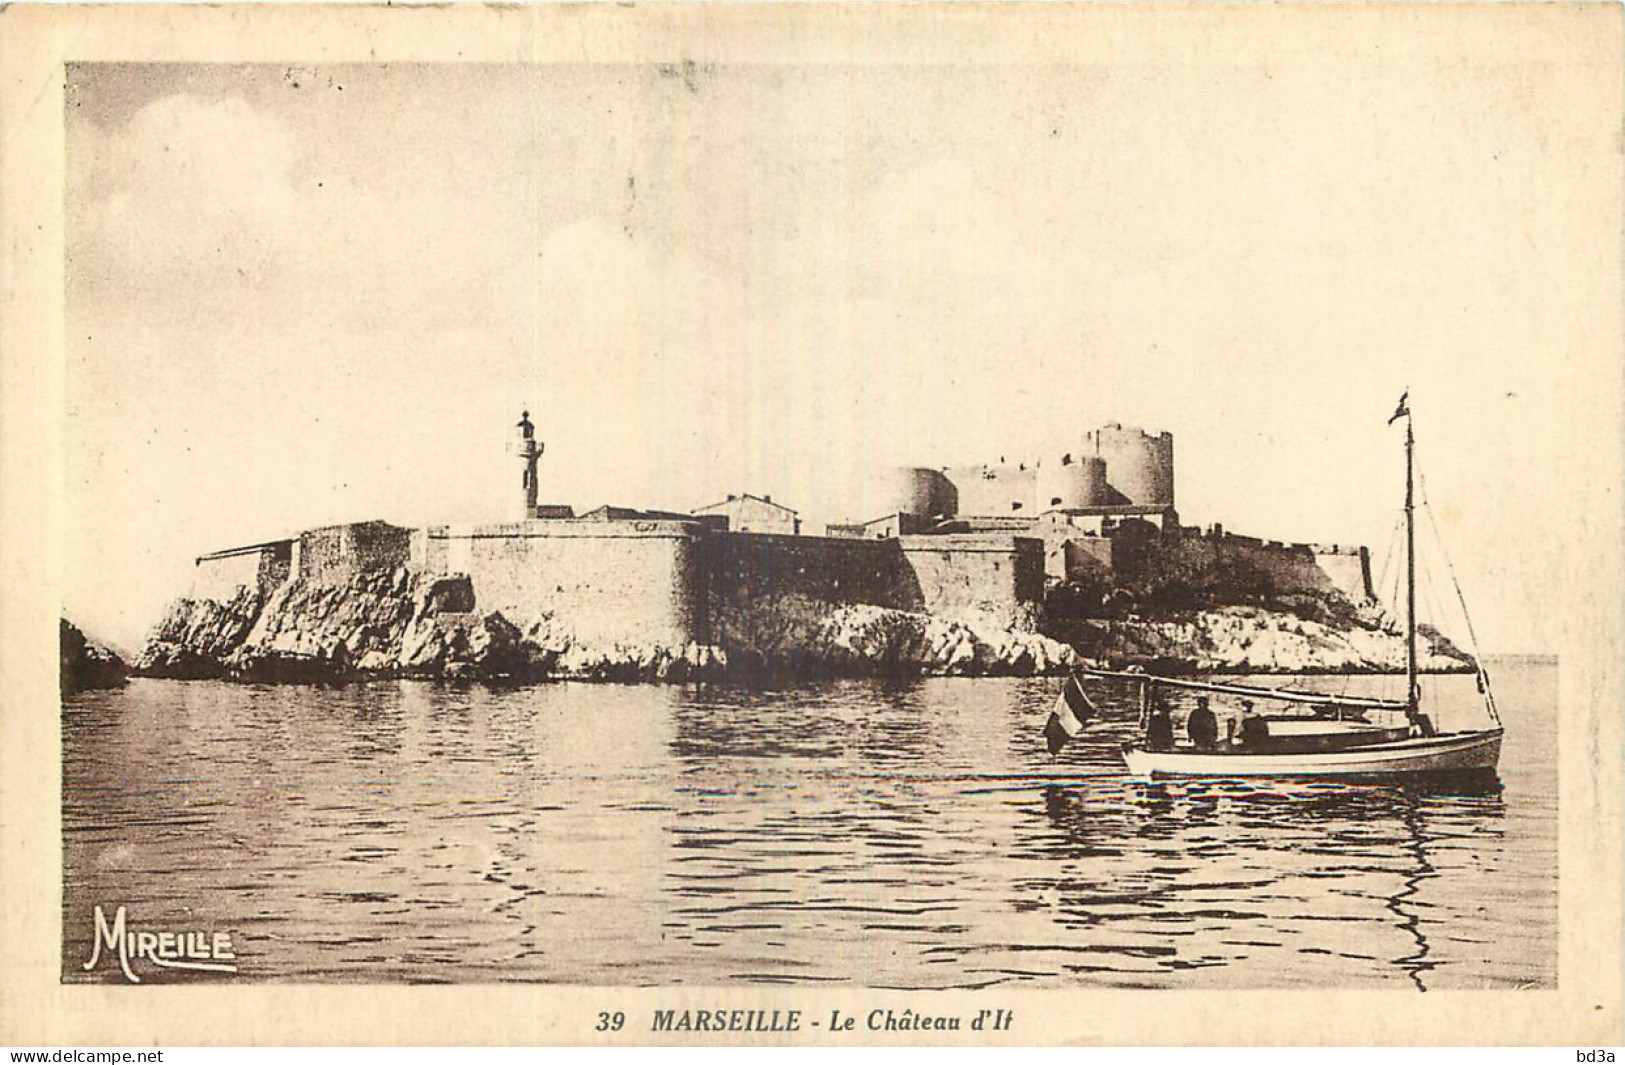 13 - MARSEILLE - CHATEAU D'IF - Festung (Château D'If), Frioul, Inseln...